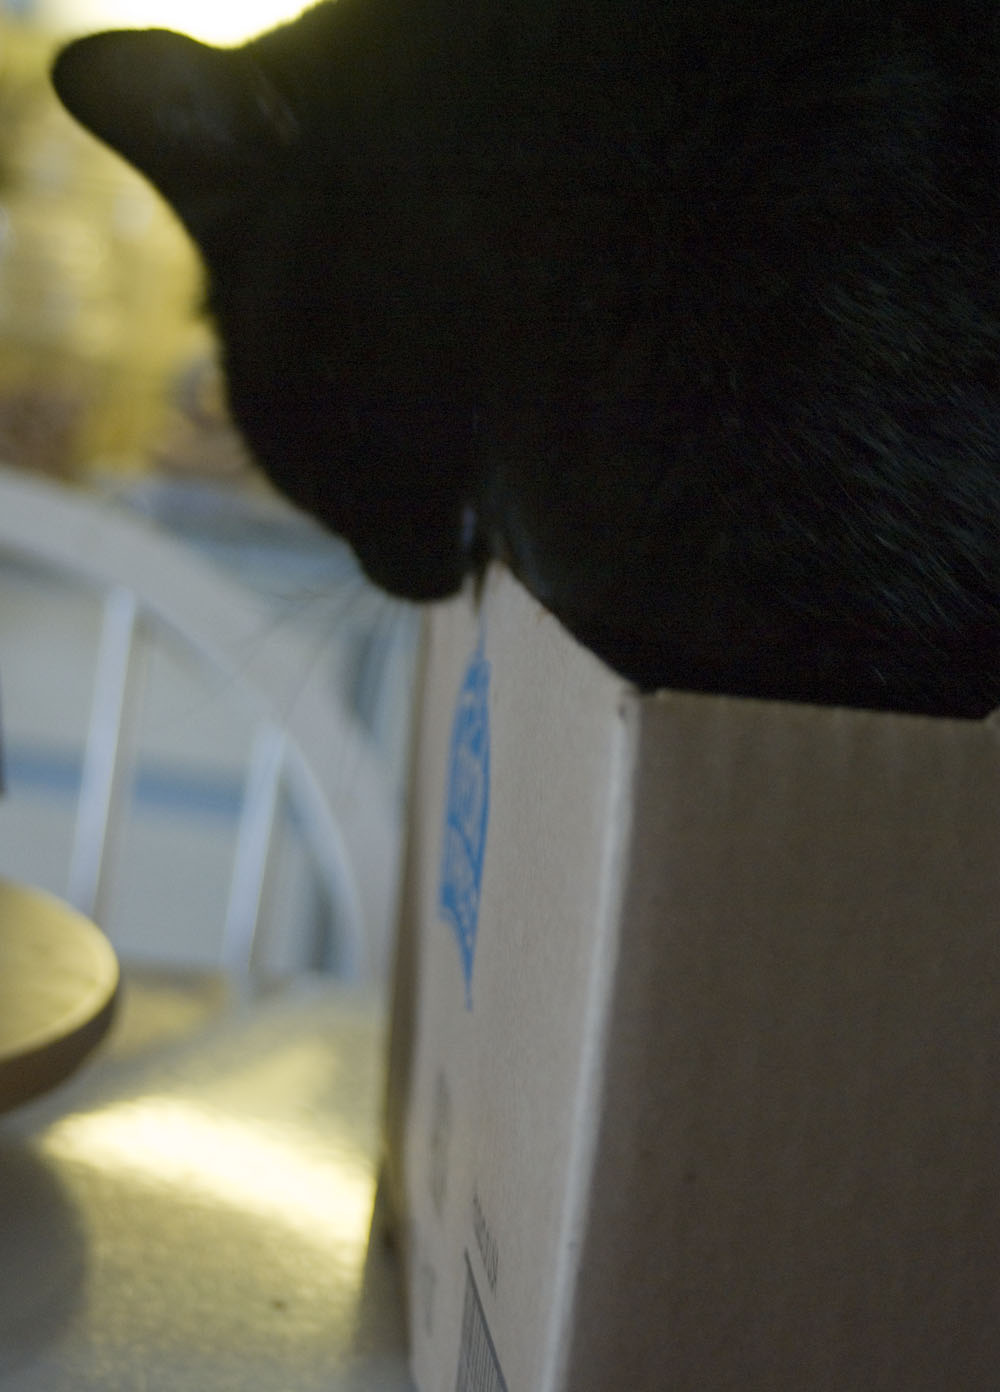 black cat biting cardboard